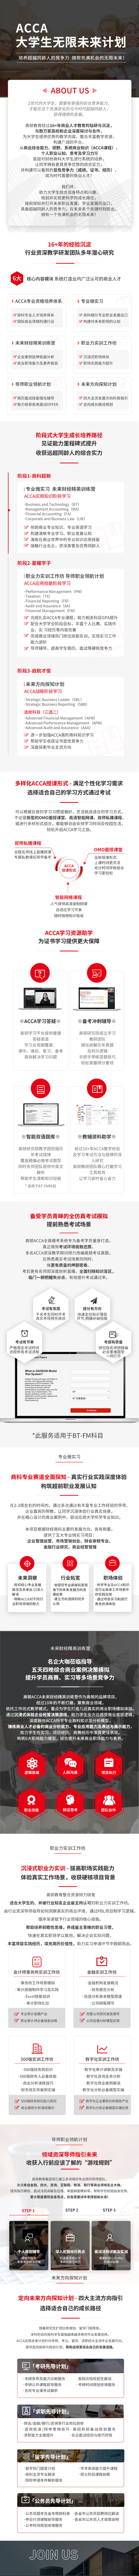 https://simg01.gaodunwangxiao.com/uploadfiles/product-center/202209/26/267e2_20220926132613.jpg